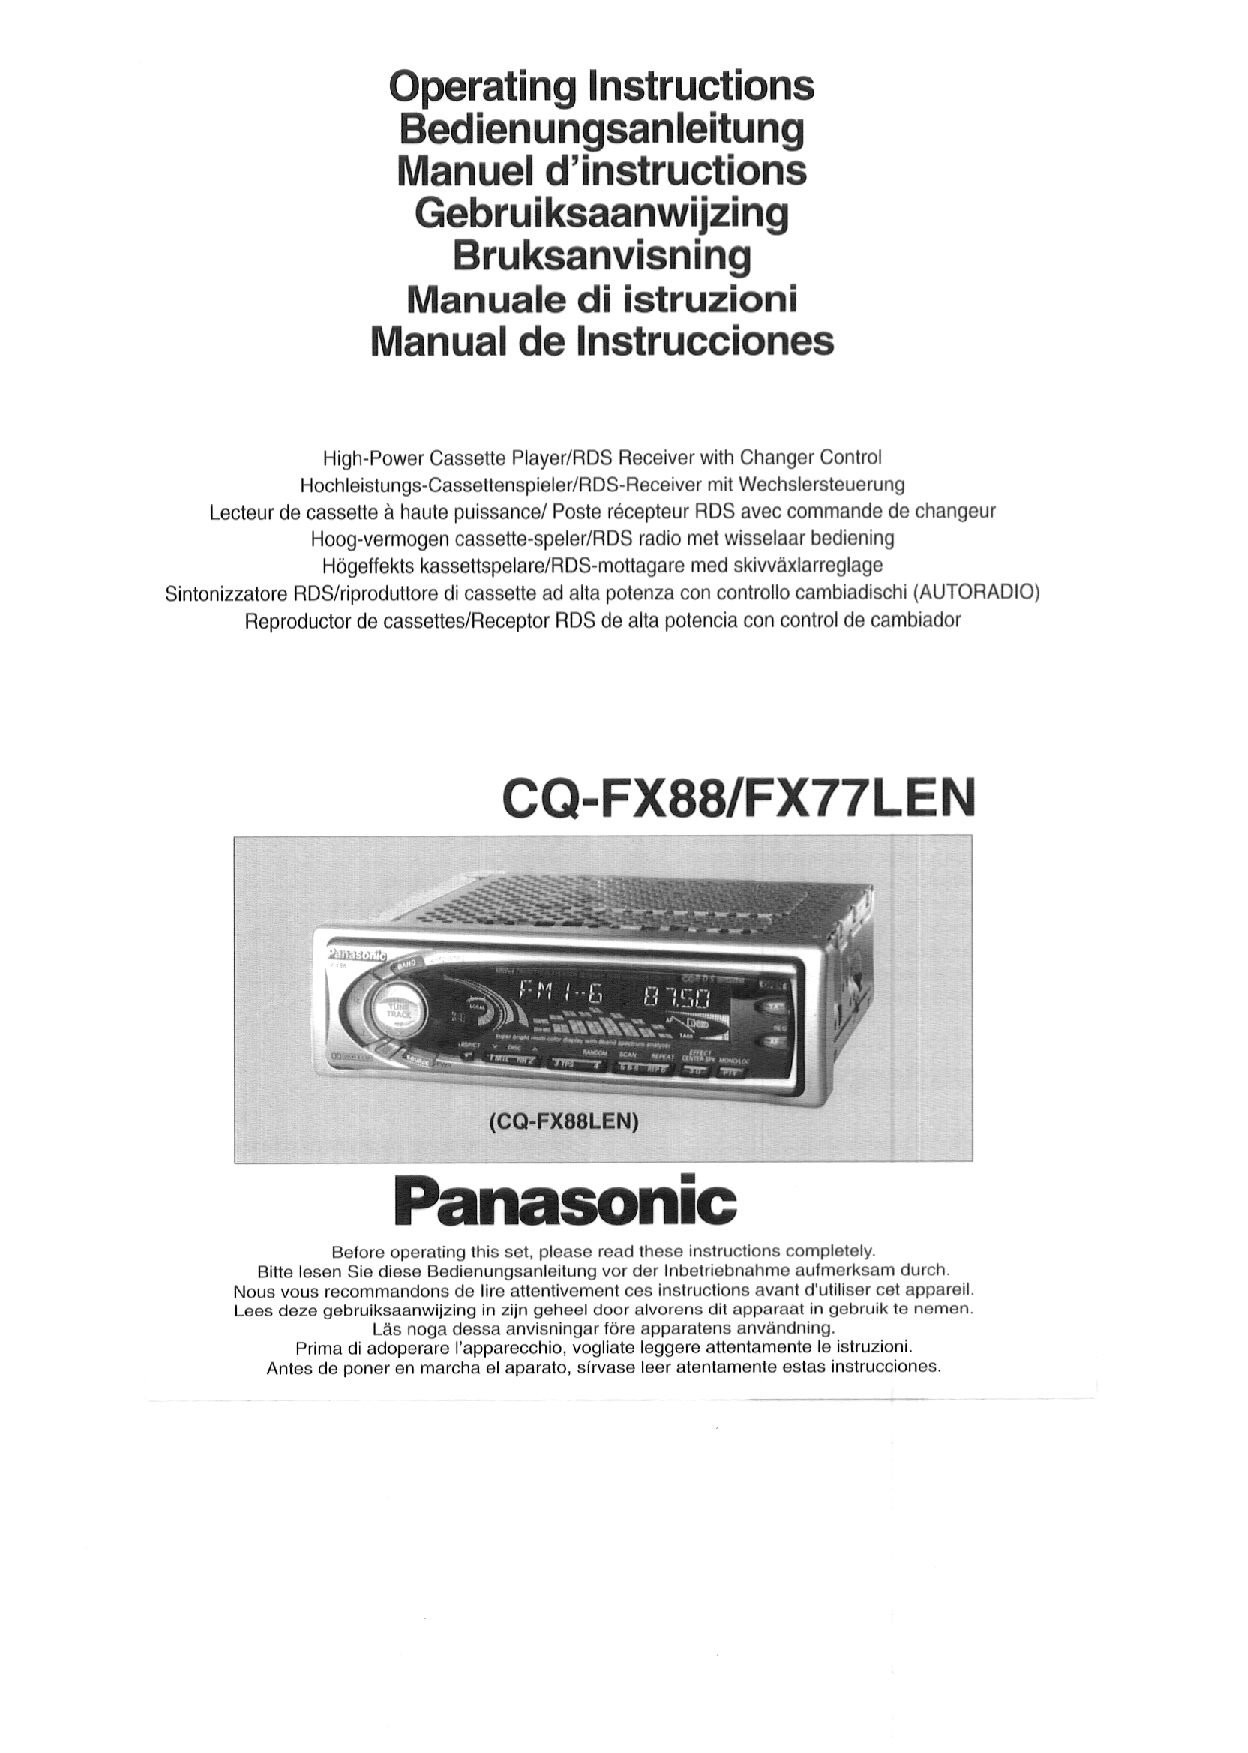 Panasonic CQ-FX77, CQ-FX88 User Manual